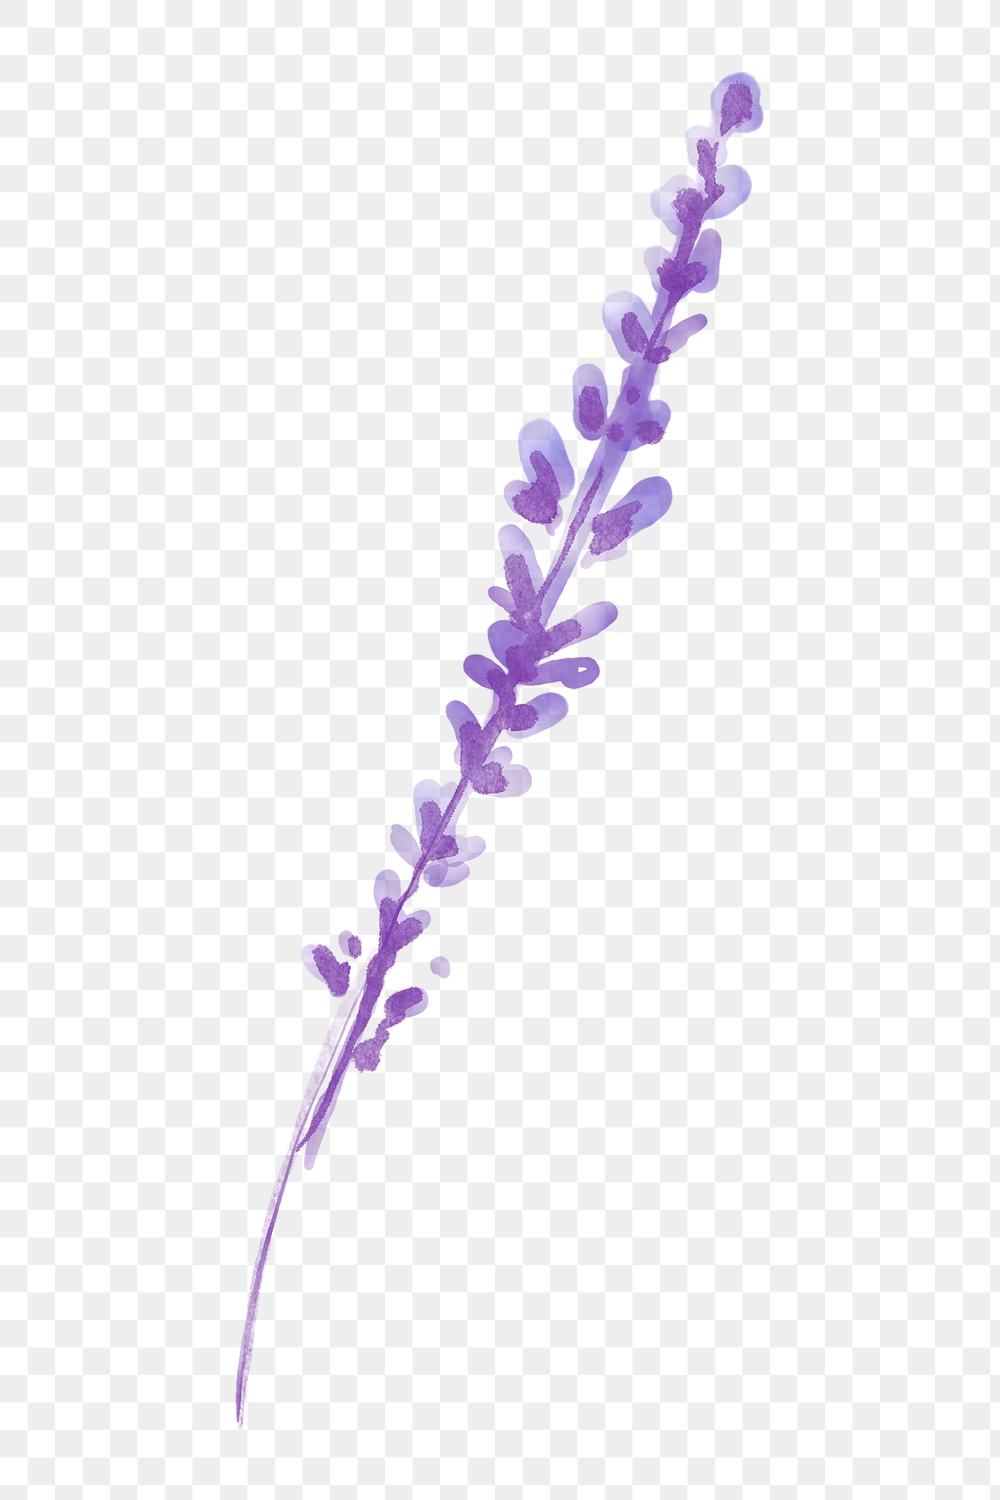 Lavender flower png sticker, floral | Premium PNG - rawpixel